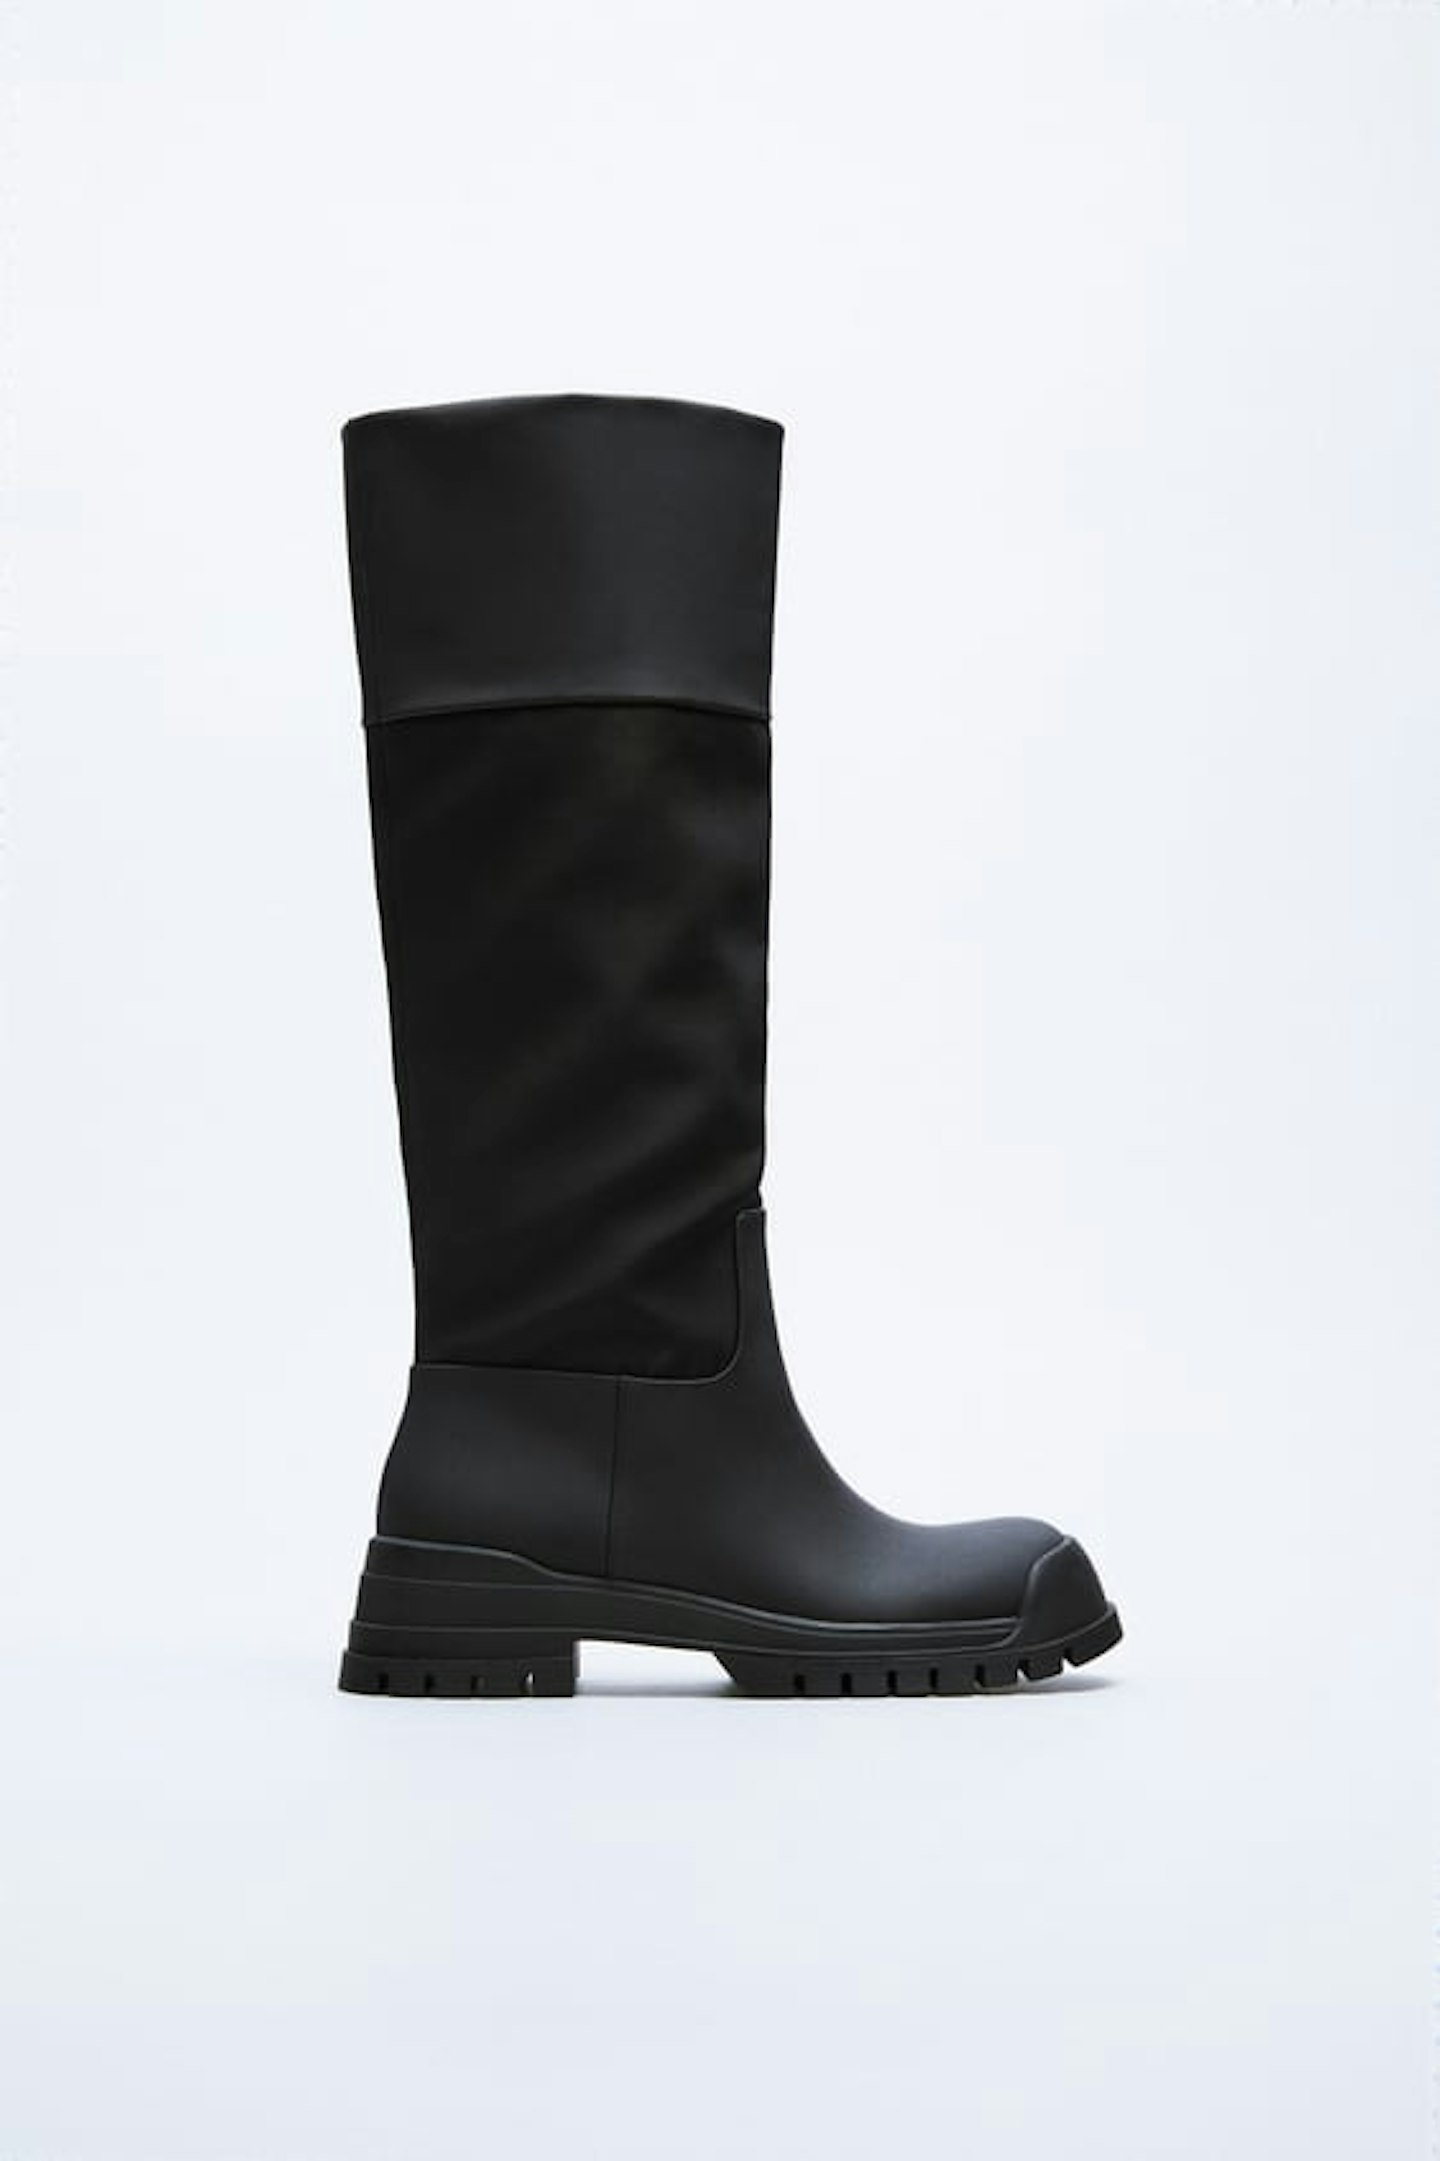 Zara, Contrast Flat Boots, £69.99